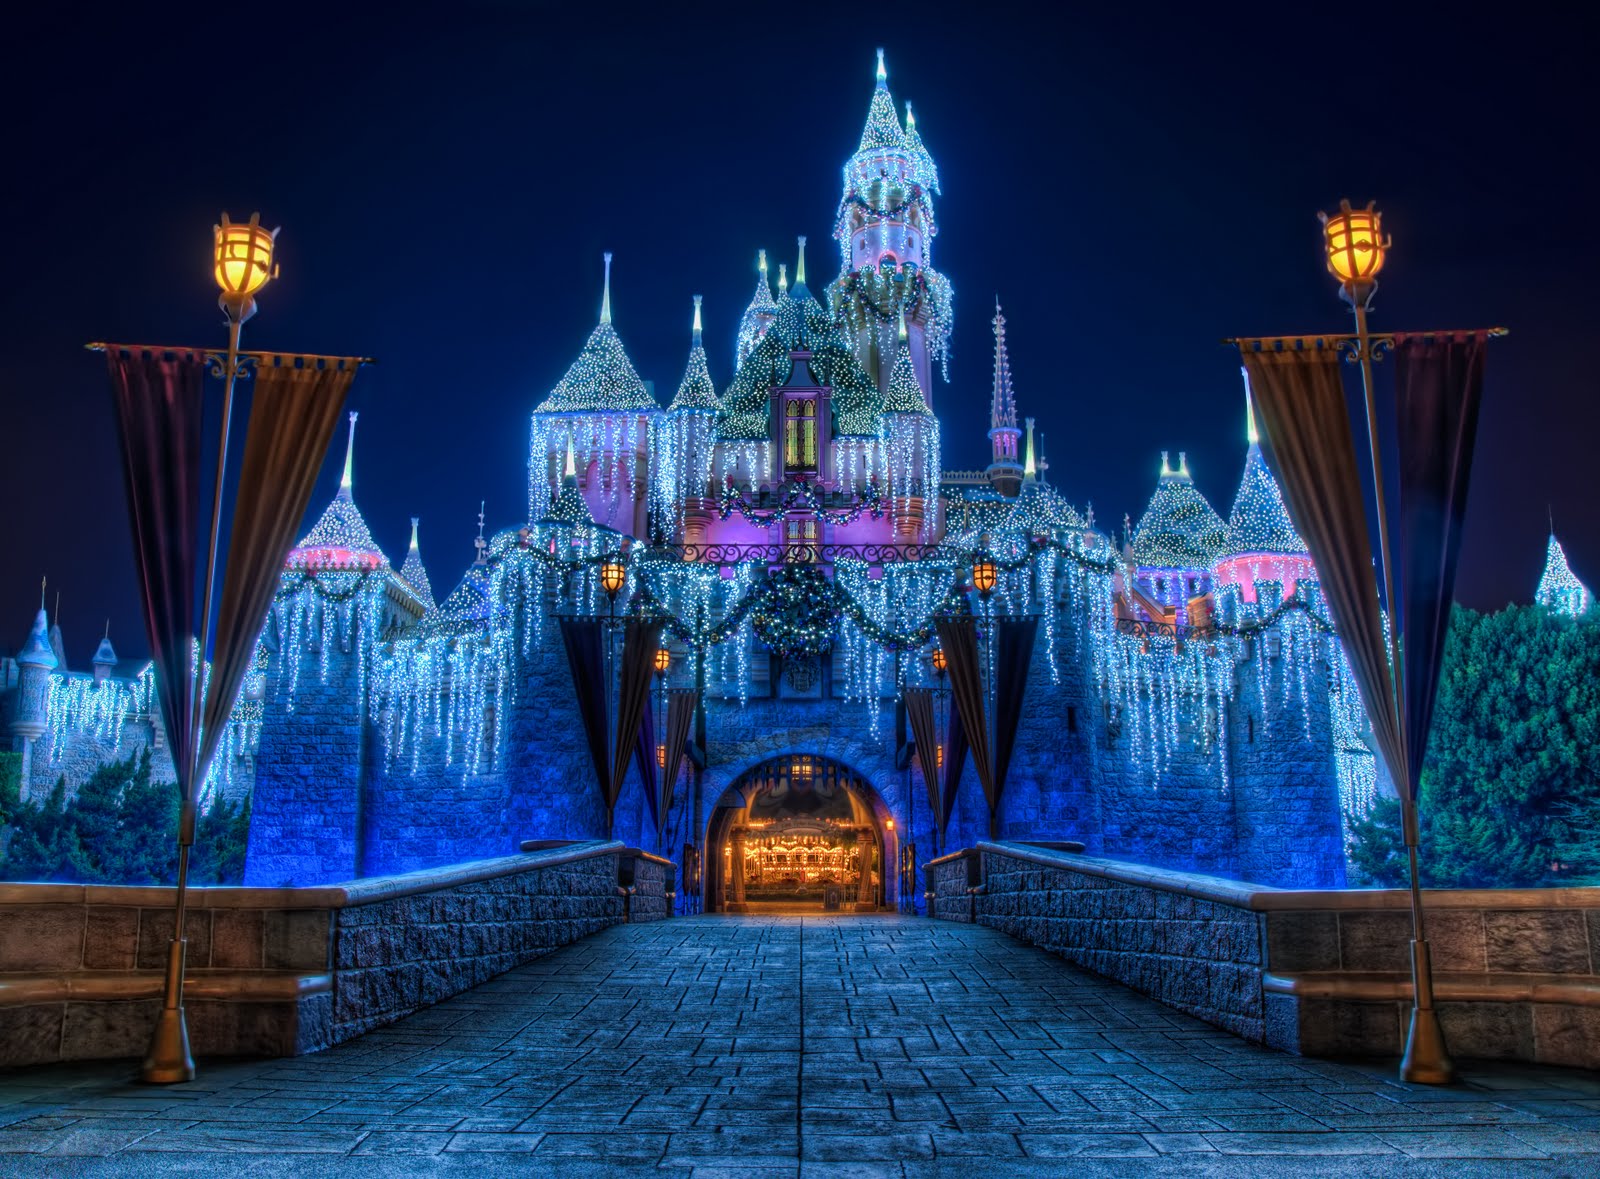 48+] Cinderella's Castle Desktop Wallpaper - WallpaperSafari